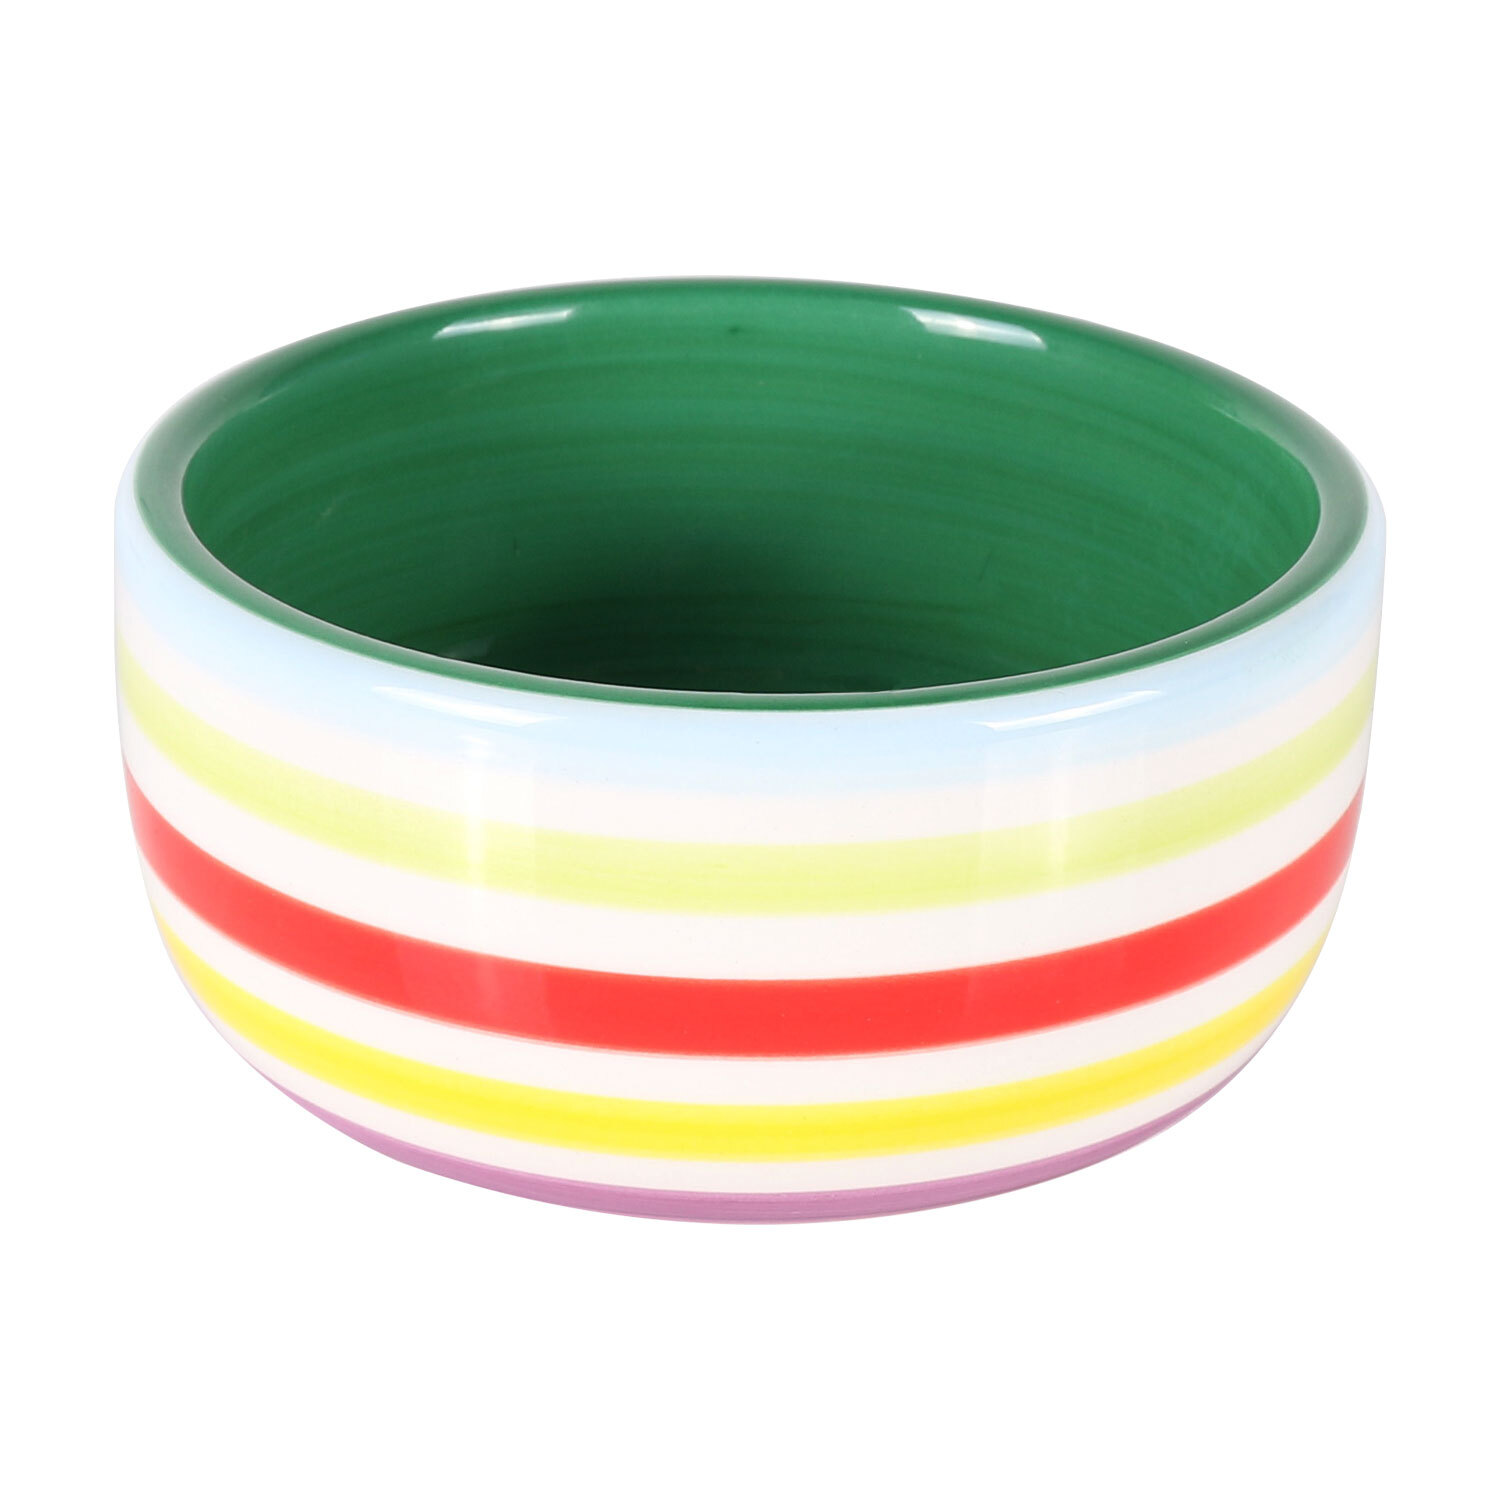 Rainbow Bowl - Medium Image 2